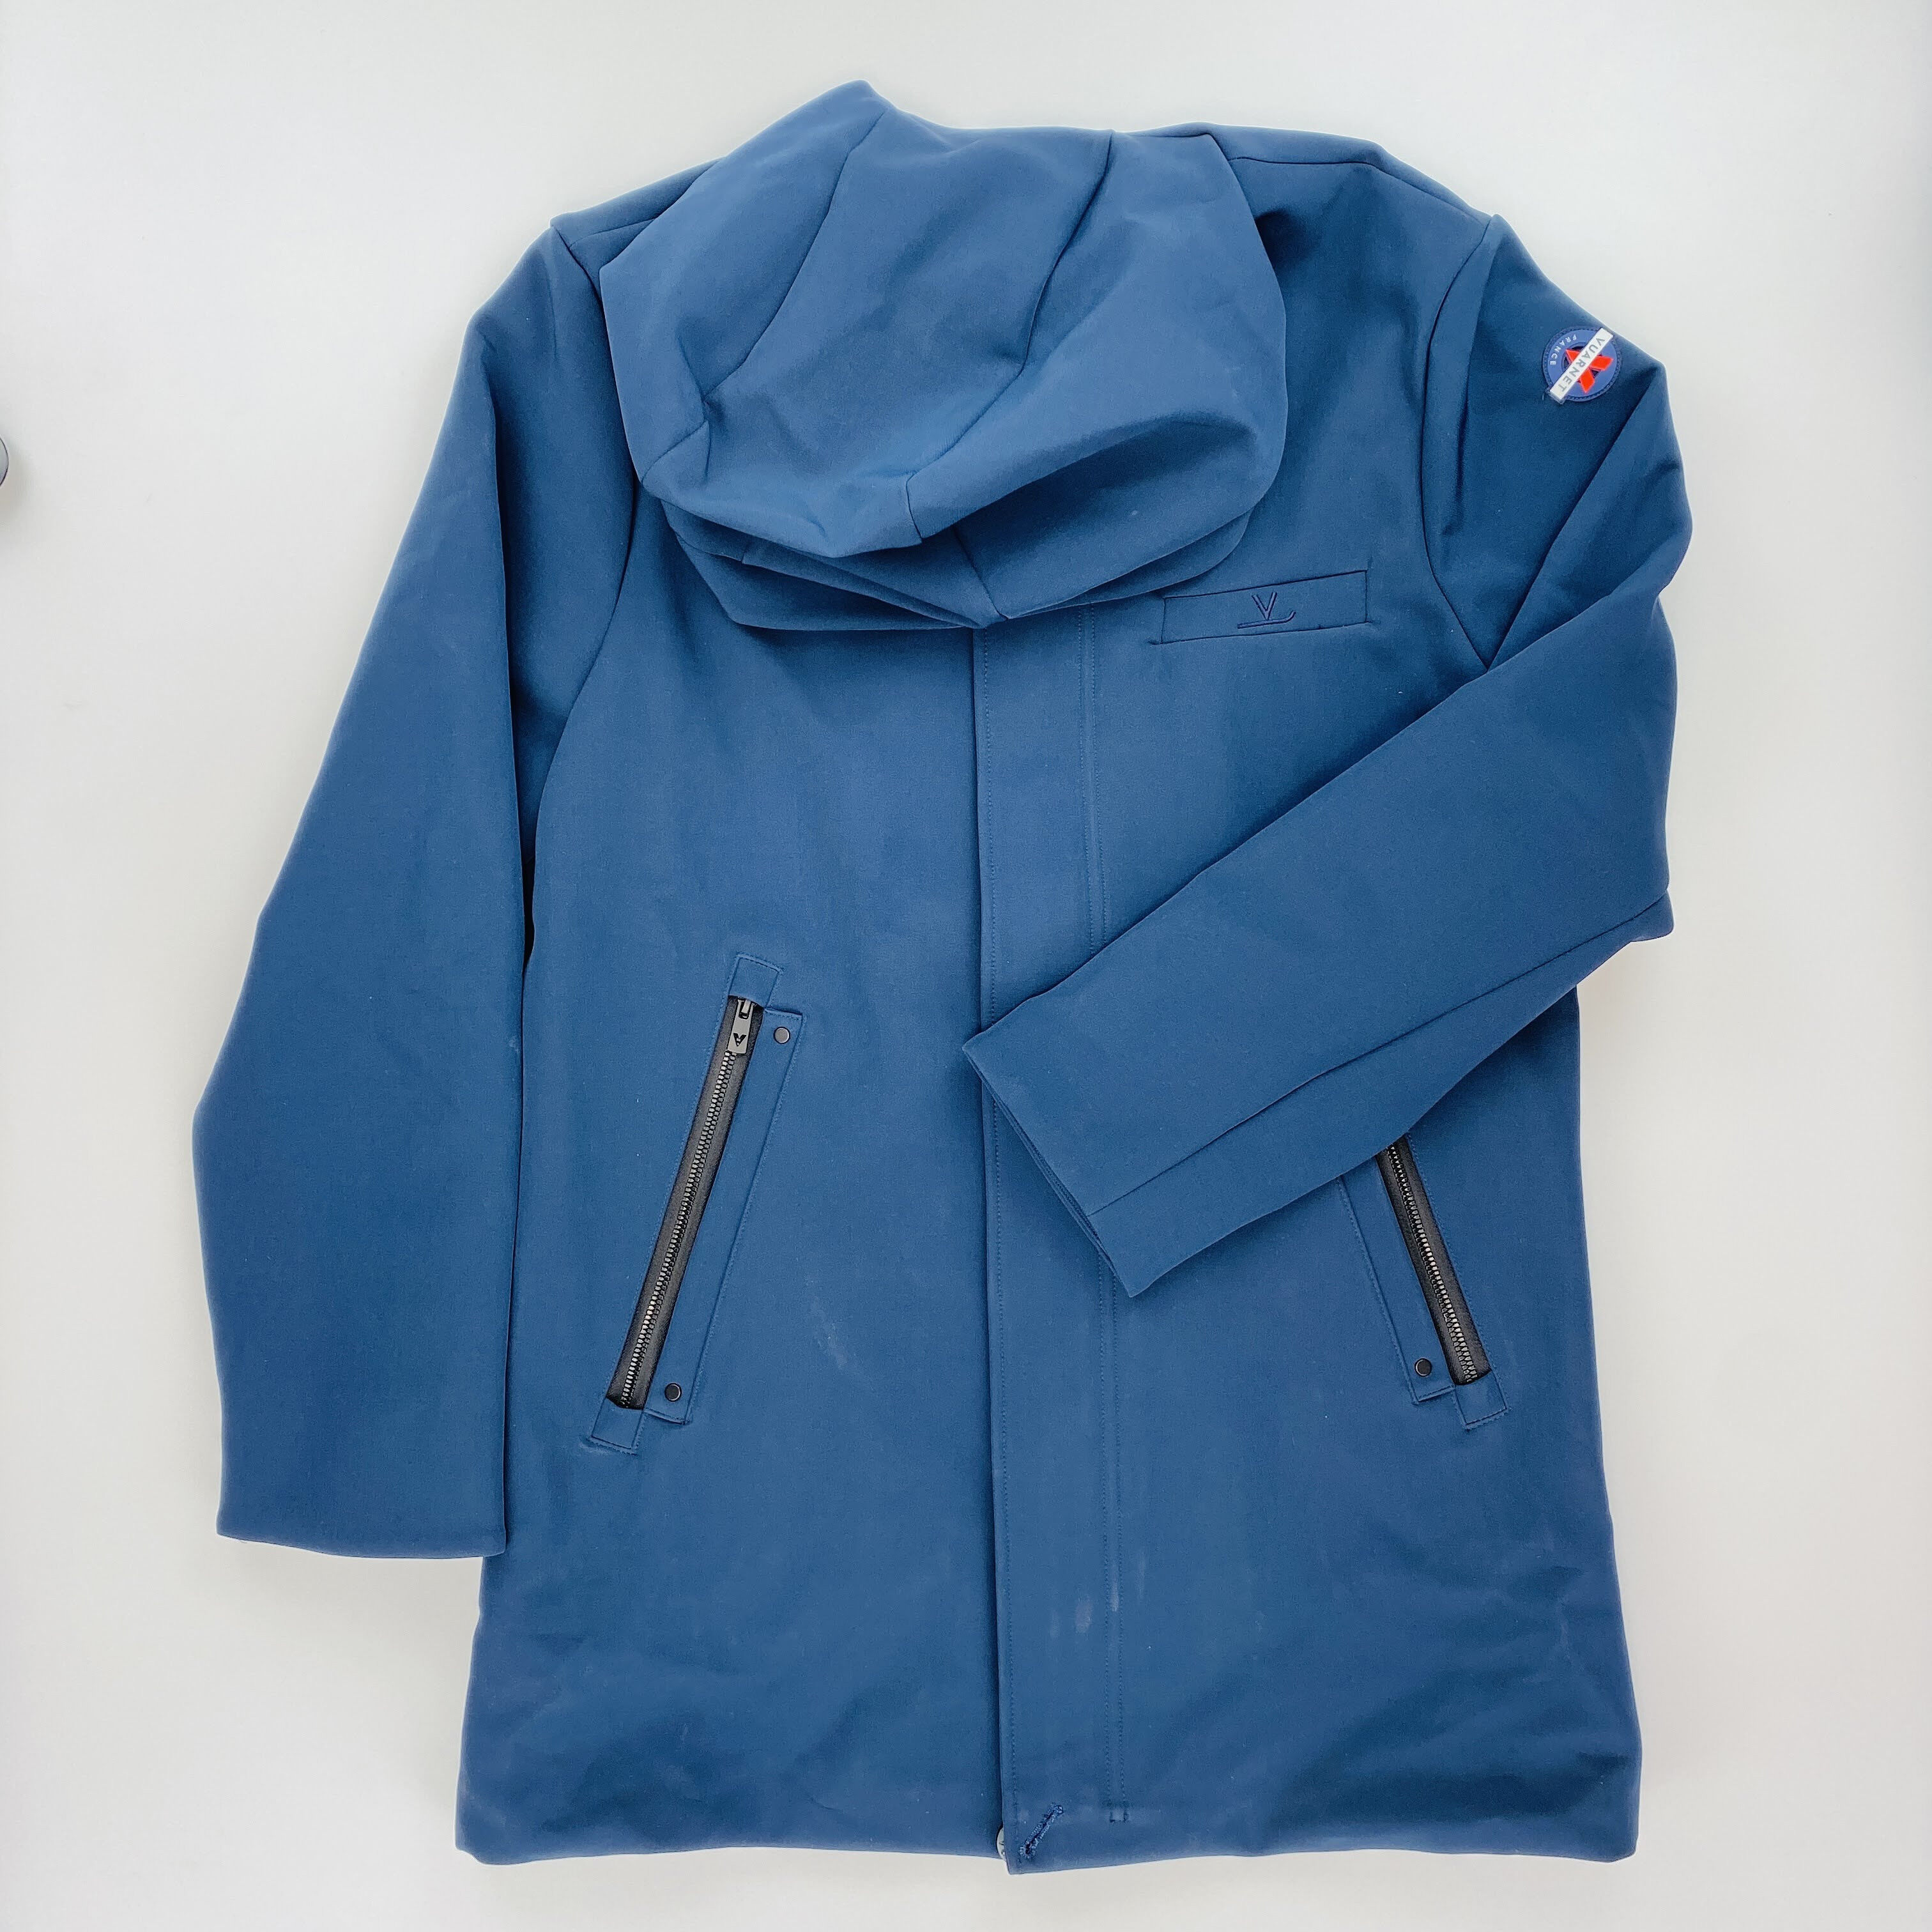 Vuarnet Kyoga Jacket - Giacca di seconda mano - Uomo - Olio blu - L | Hardloop